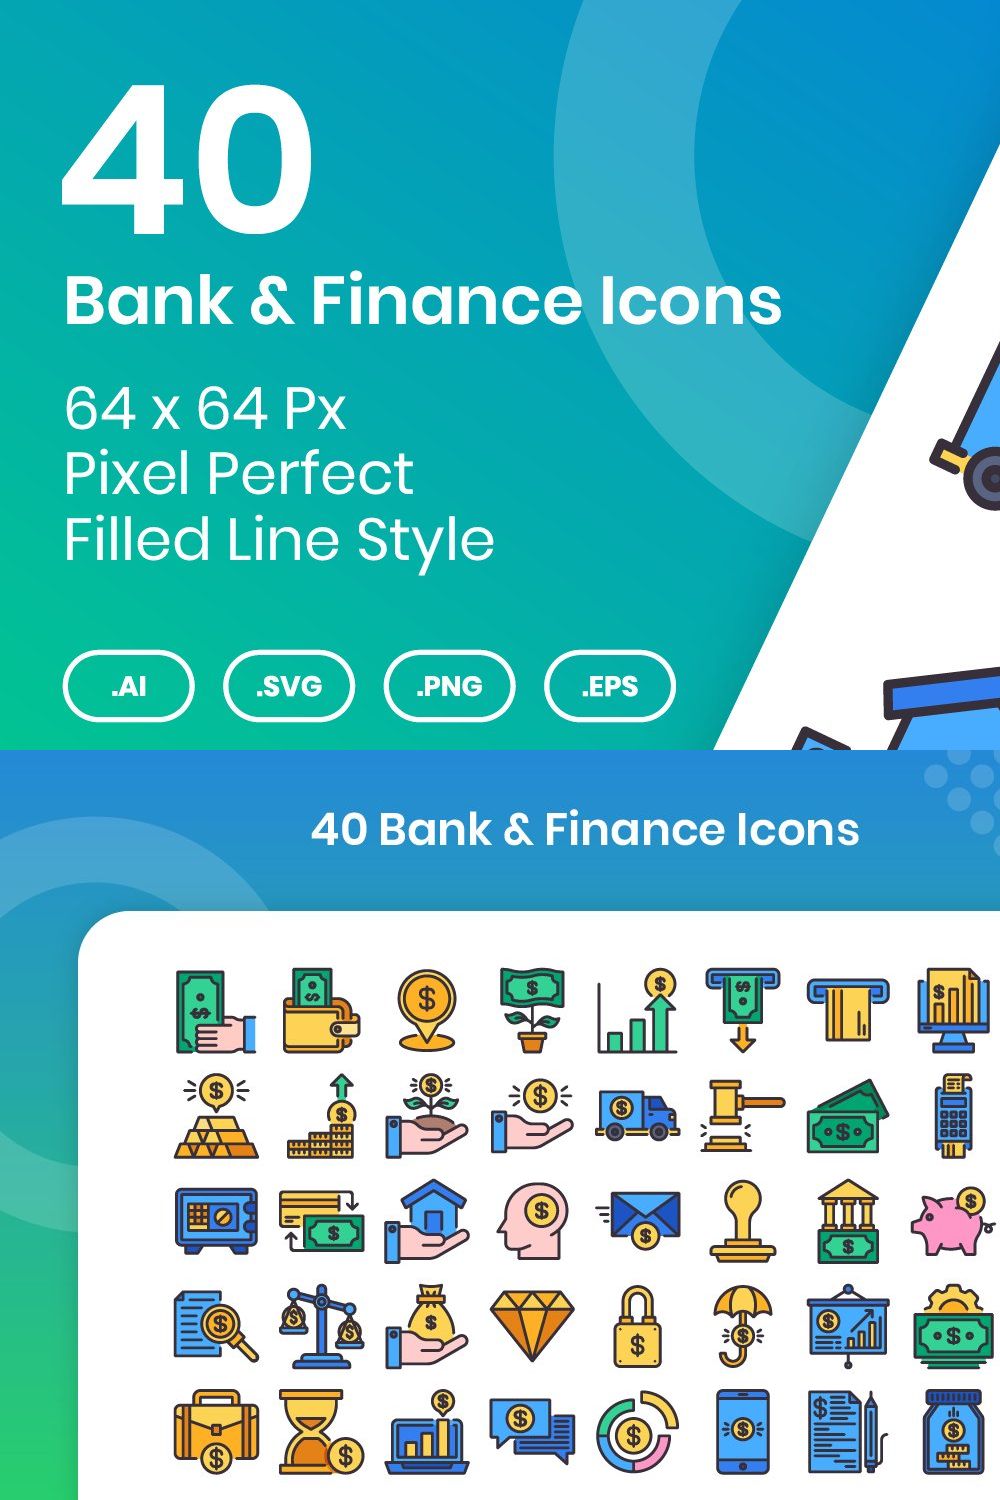 40 Bank & Finance - Filled Line pinterest preview image.